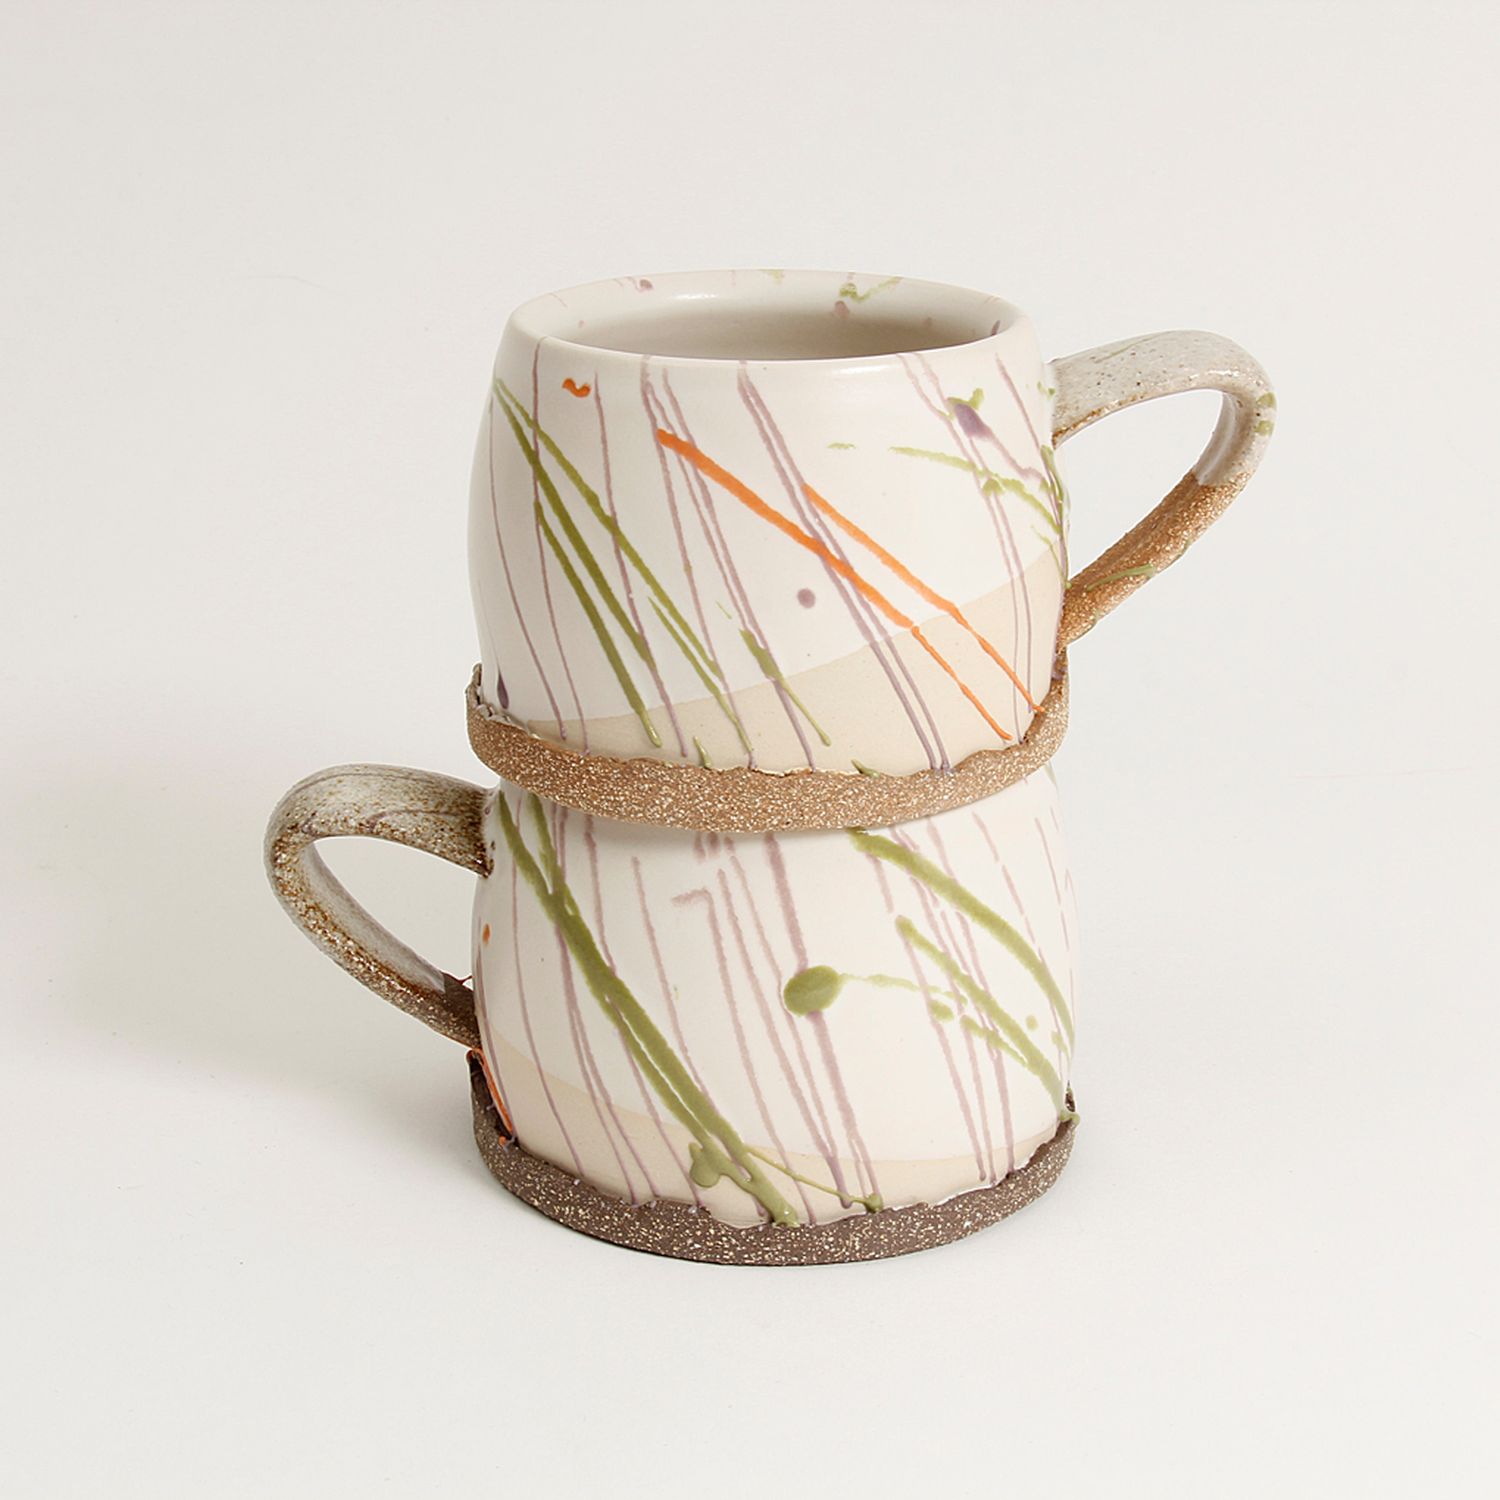 Gracia Isabel Gomez: “Tealicious” White Chocolate Mug with Colours Product Image 5 of 7